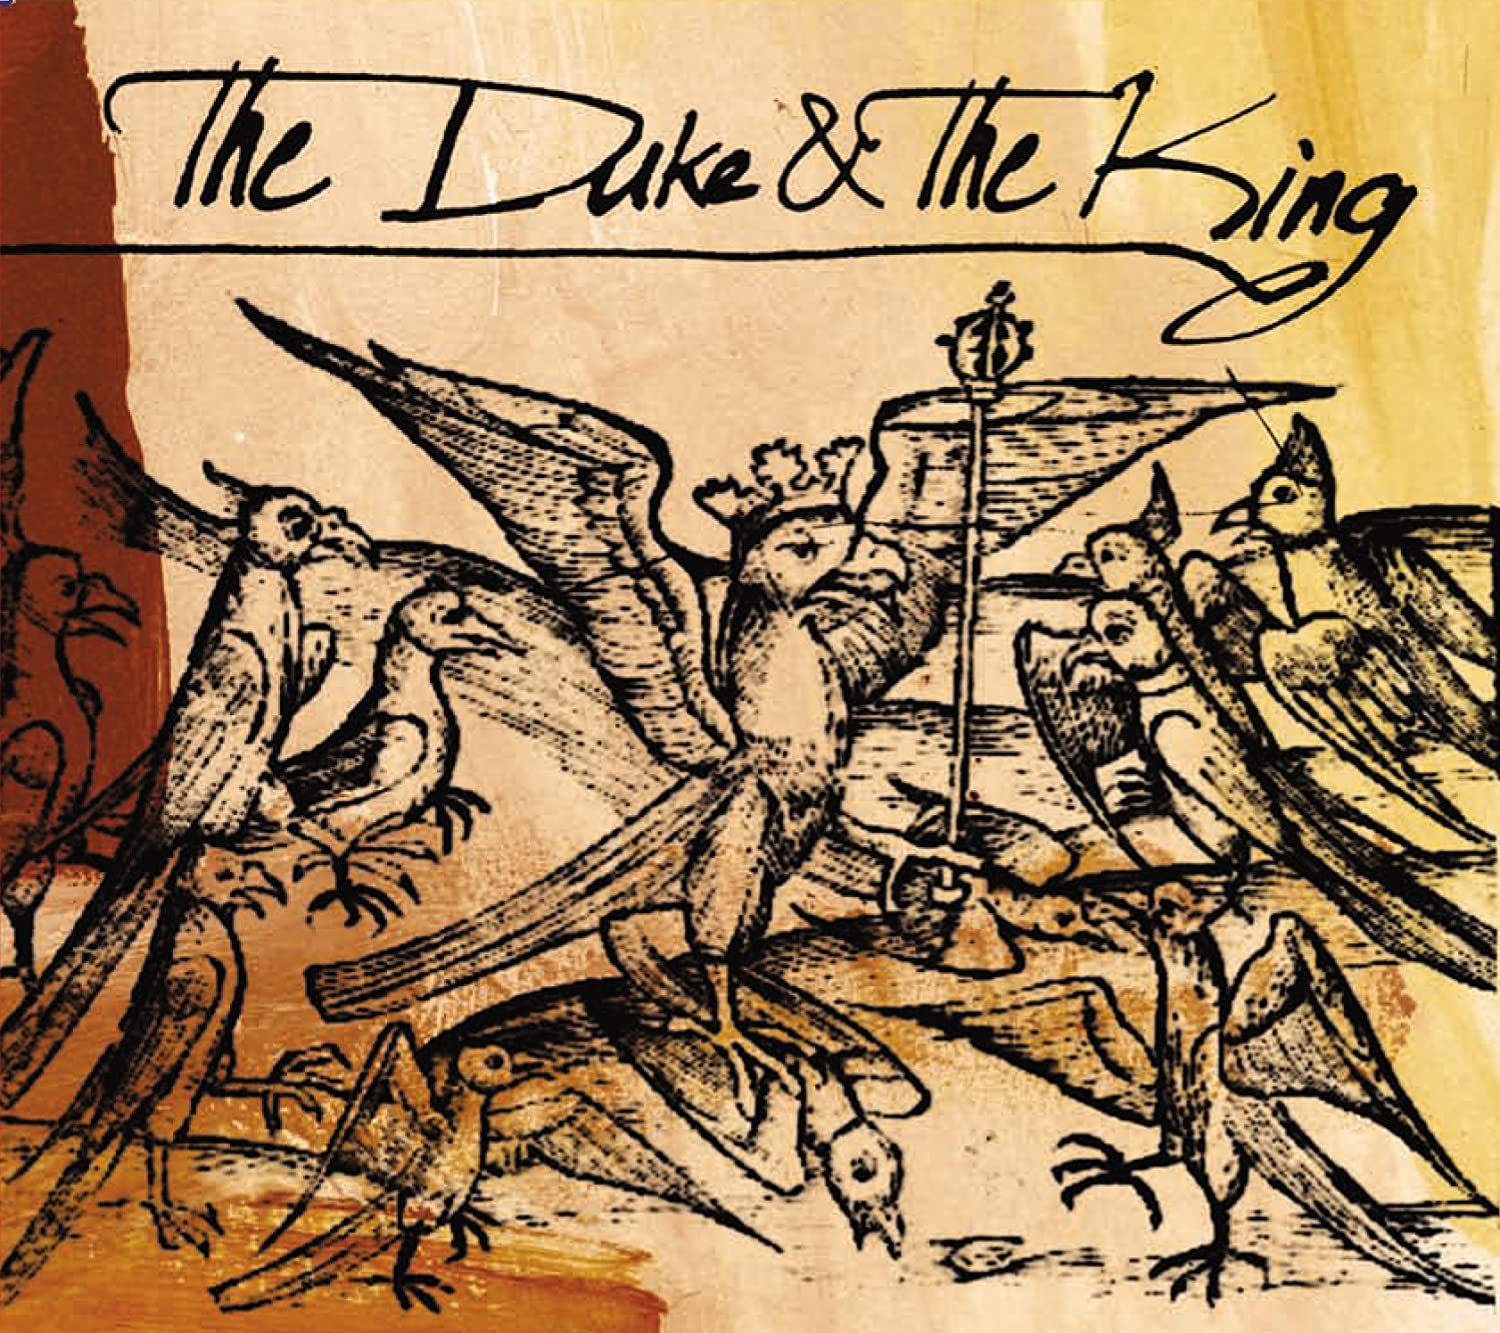 Duke & The King, The